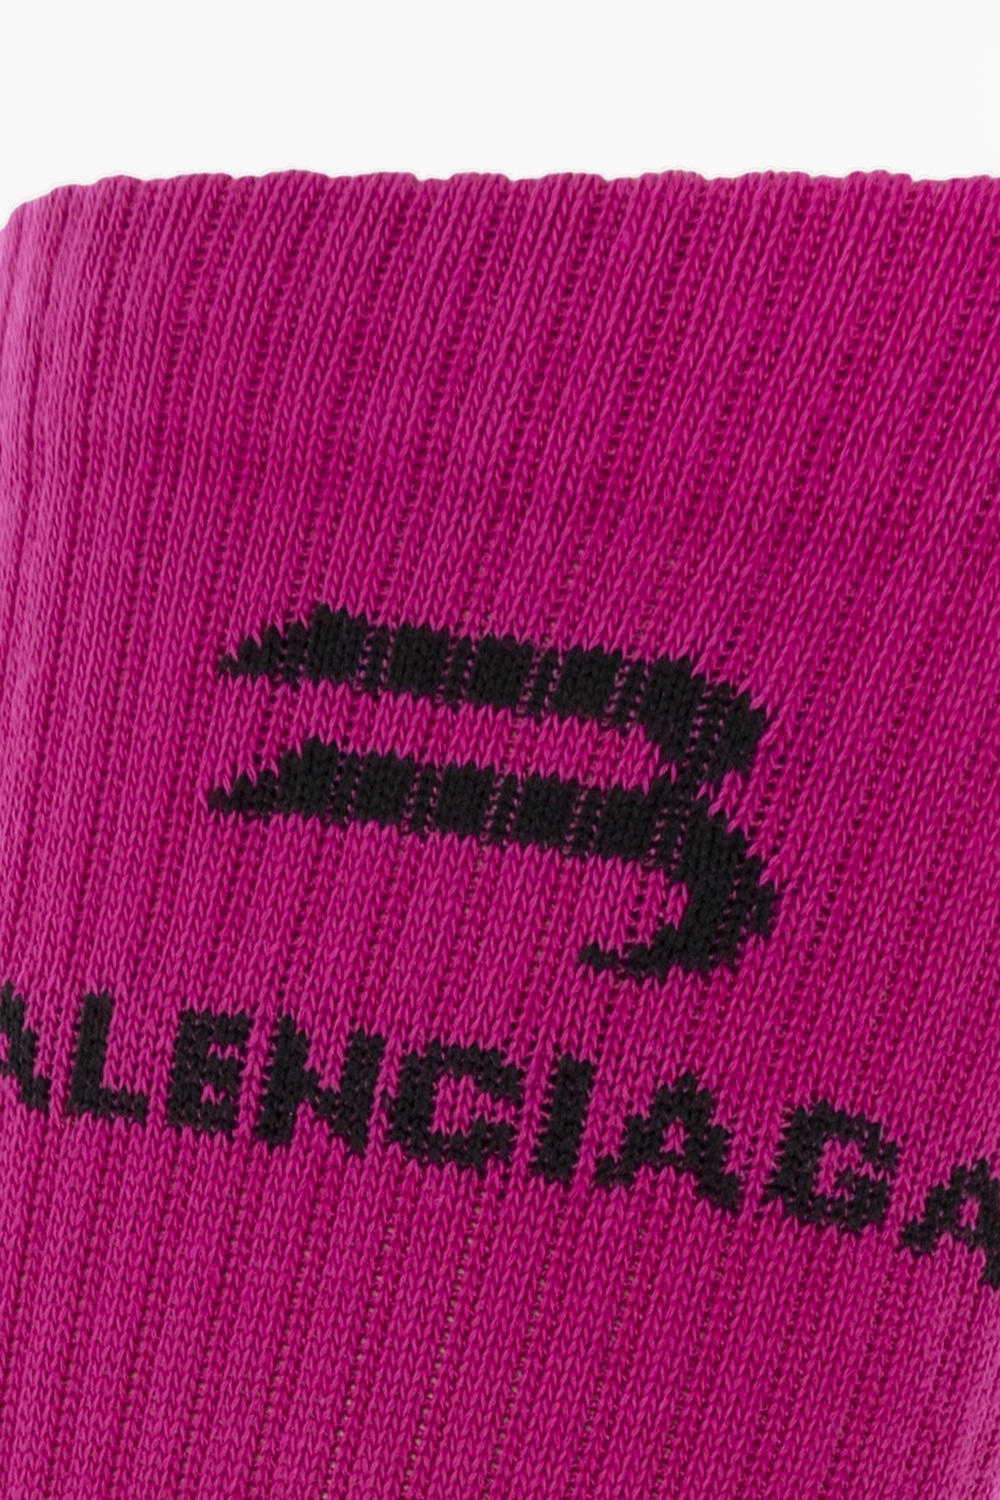 Balenciaga Check out the most fashionable models